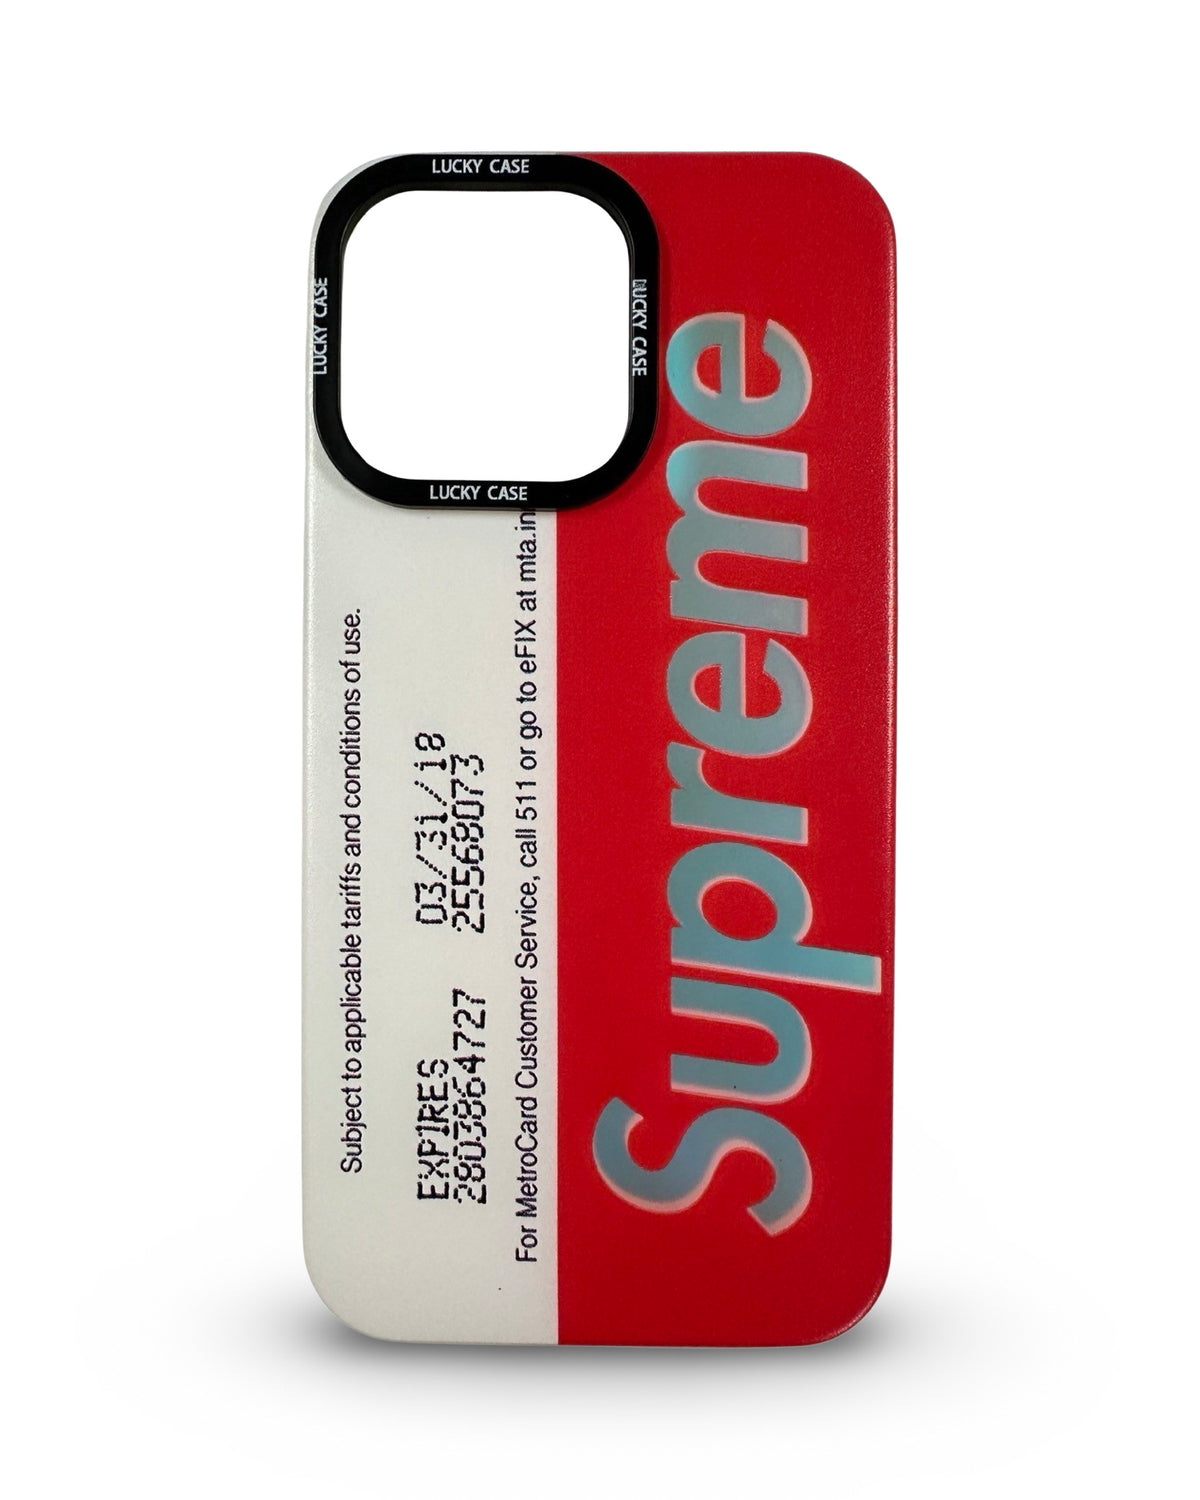 CaseNerd "SUP MetroCard" iPhone Case